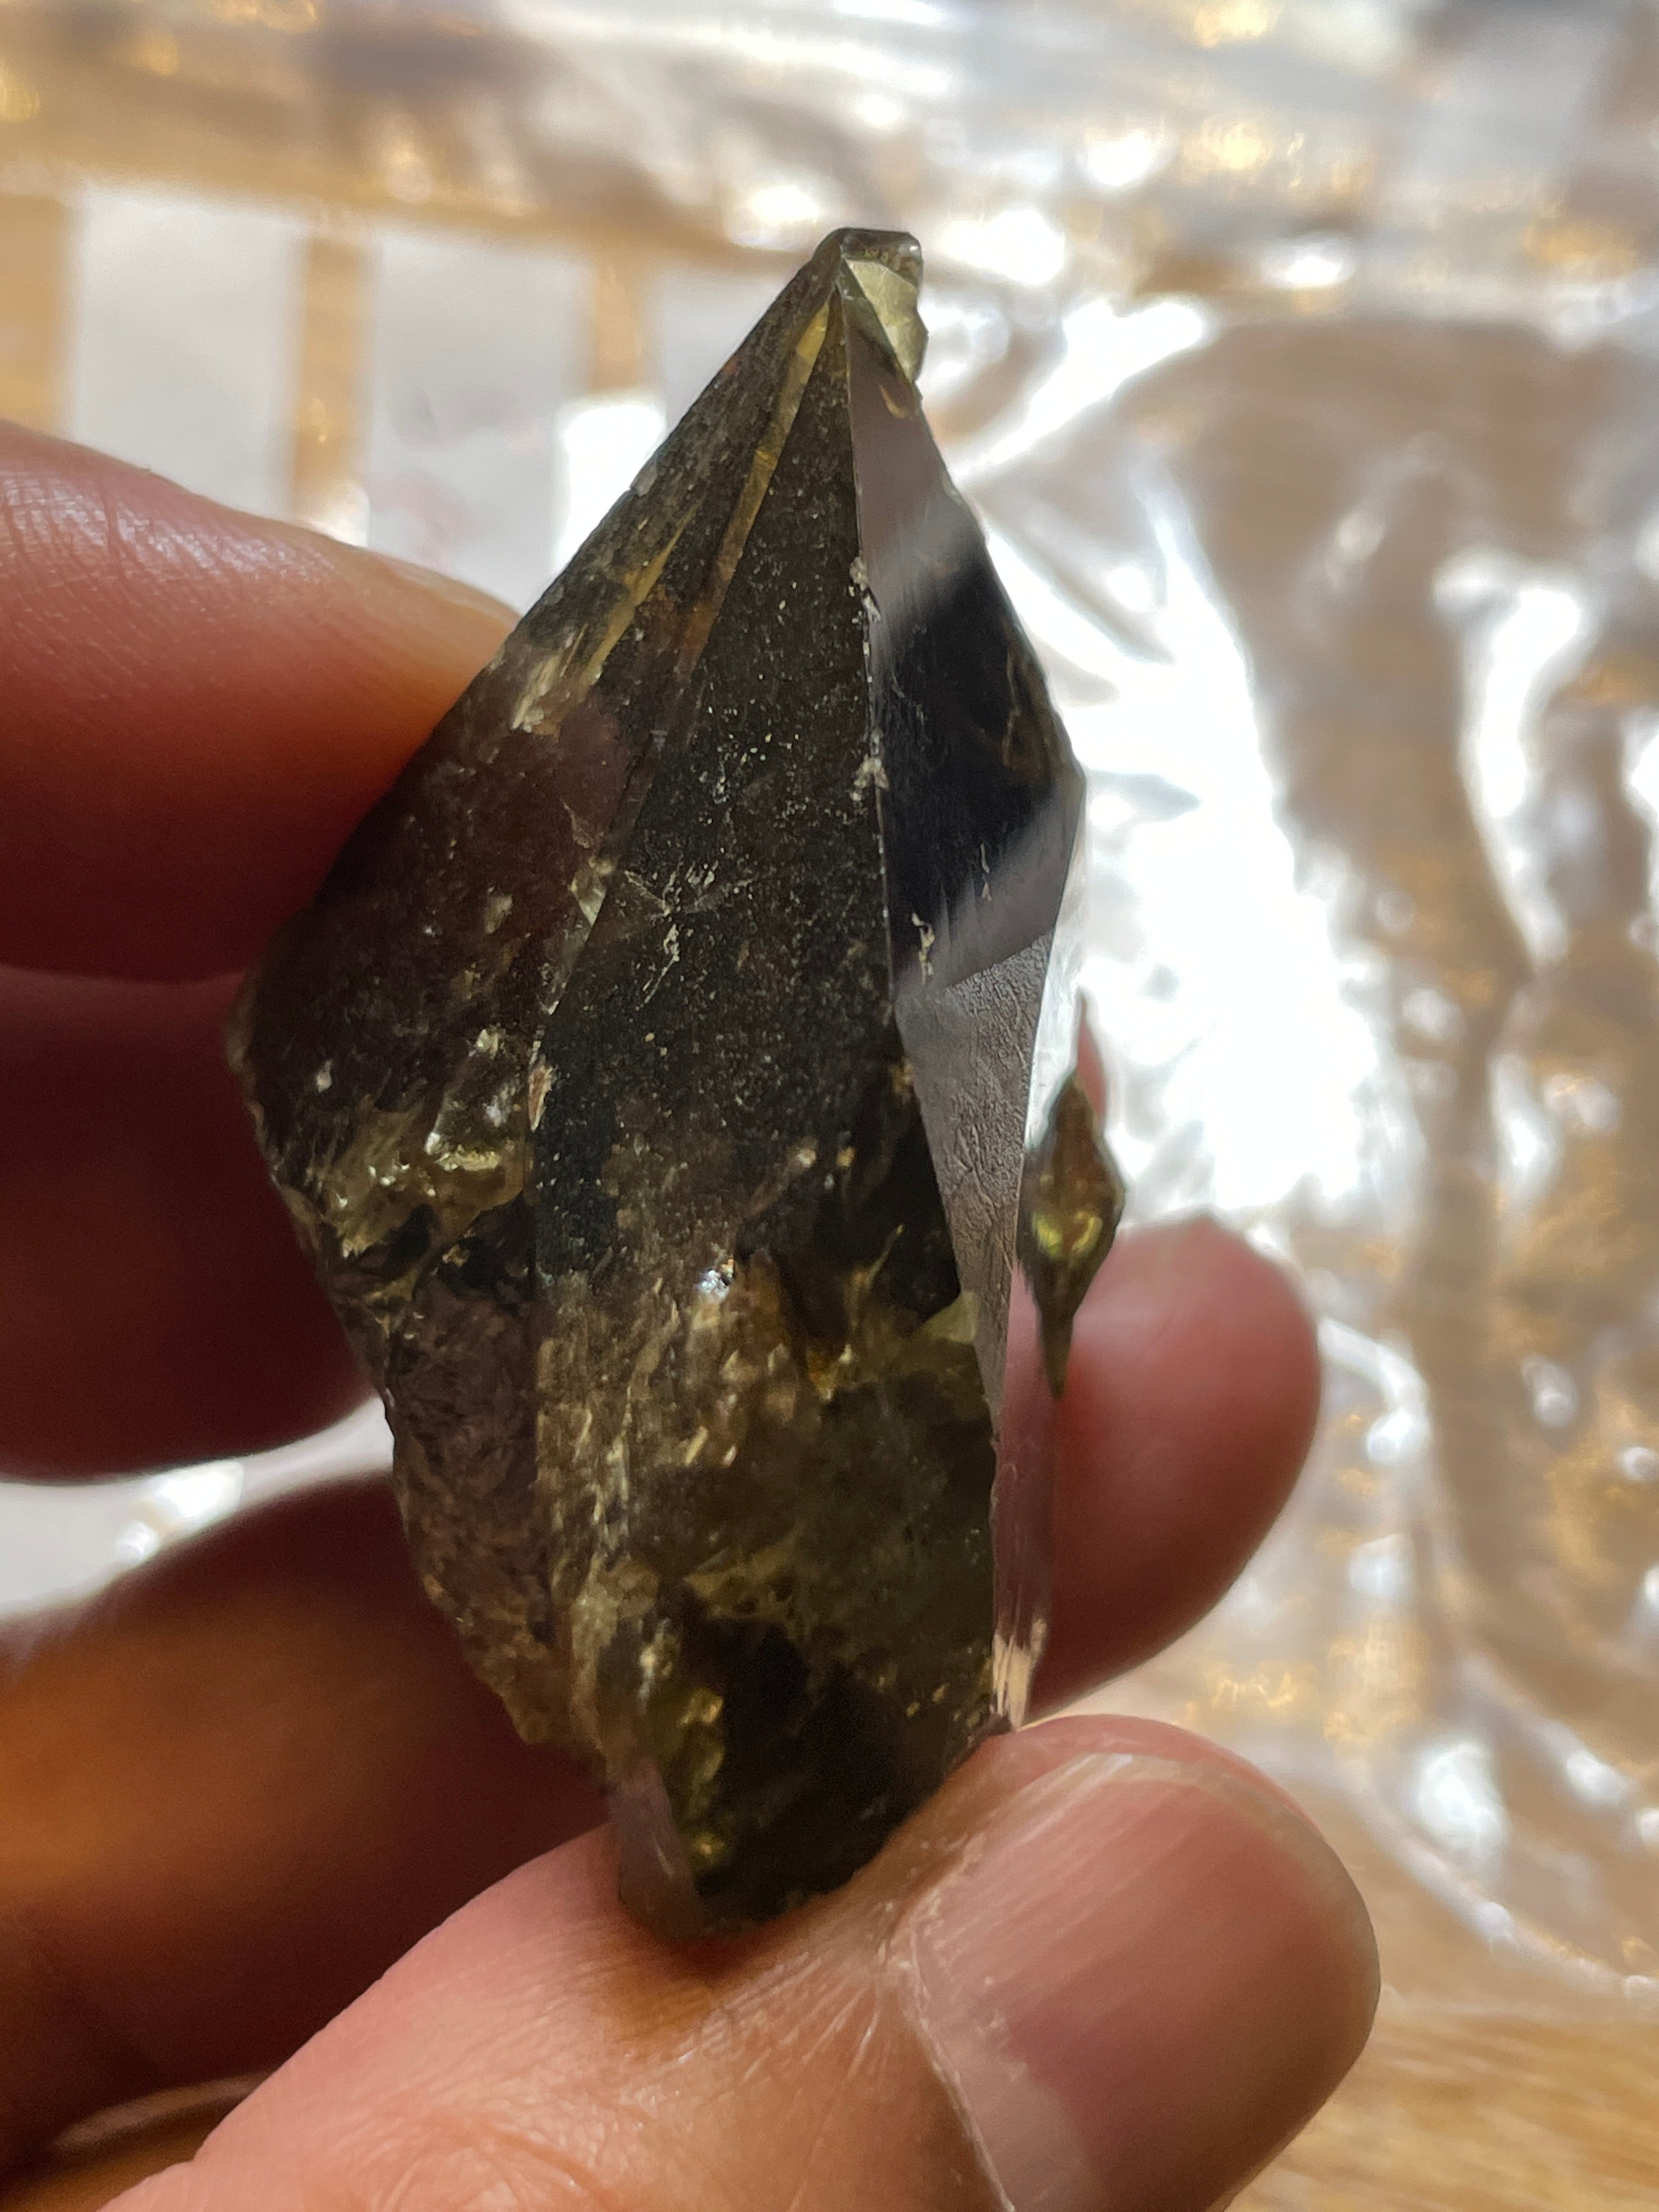 241.59Ct / 43.31Gm Tanzanian Sphene Crystal Untreated Unheated. Very High End Ultra Rare